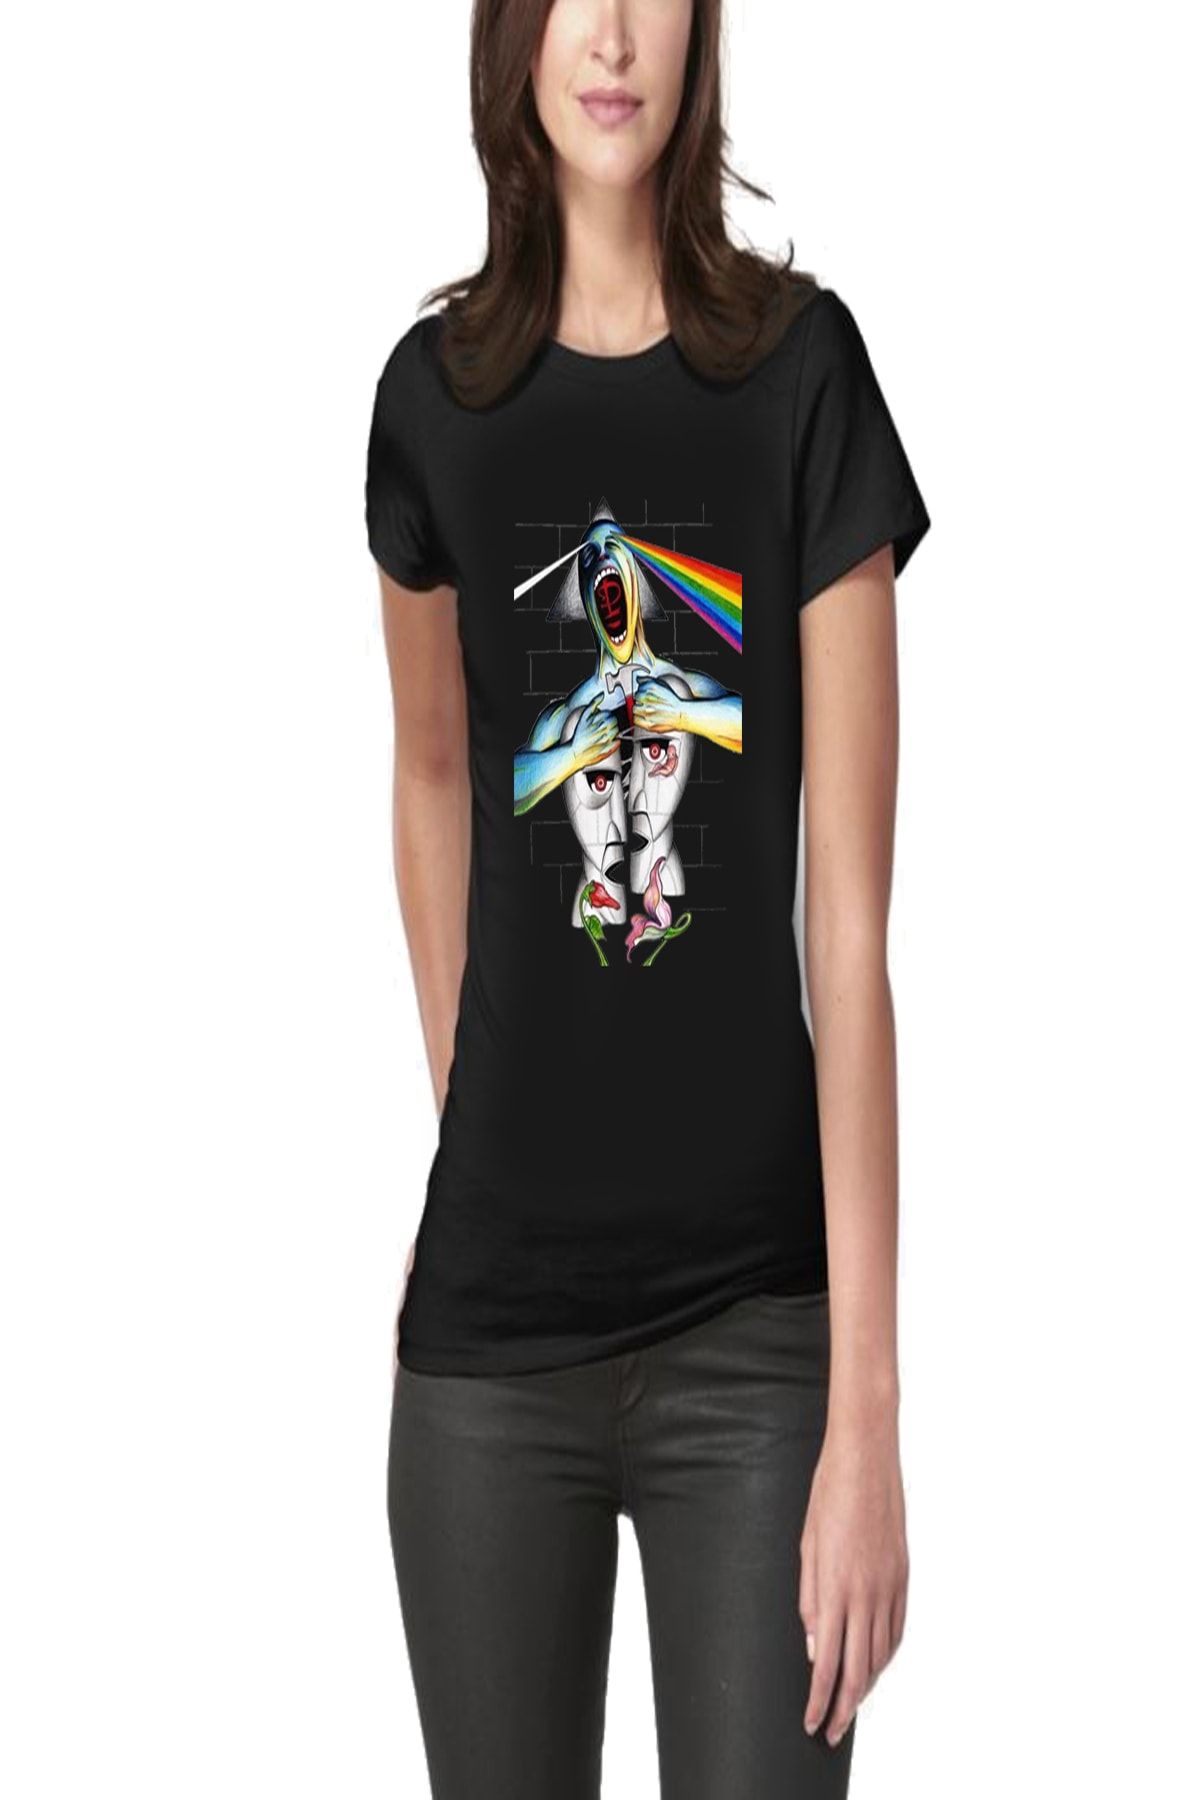 Art T-Shirt Pink Floyd Anthology Baskılı Tasarım Kadın Tişört